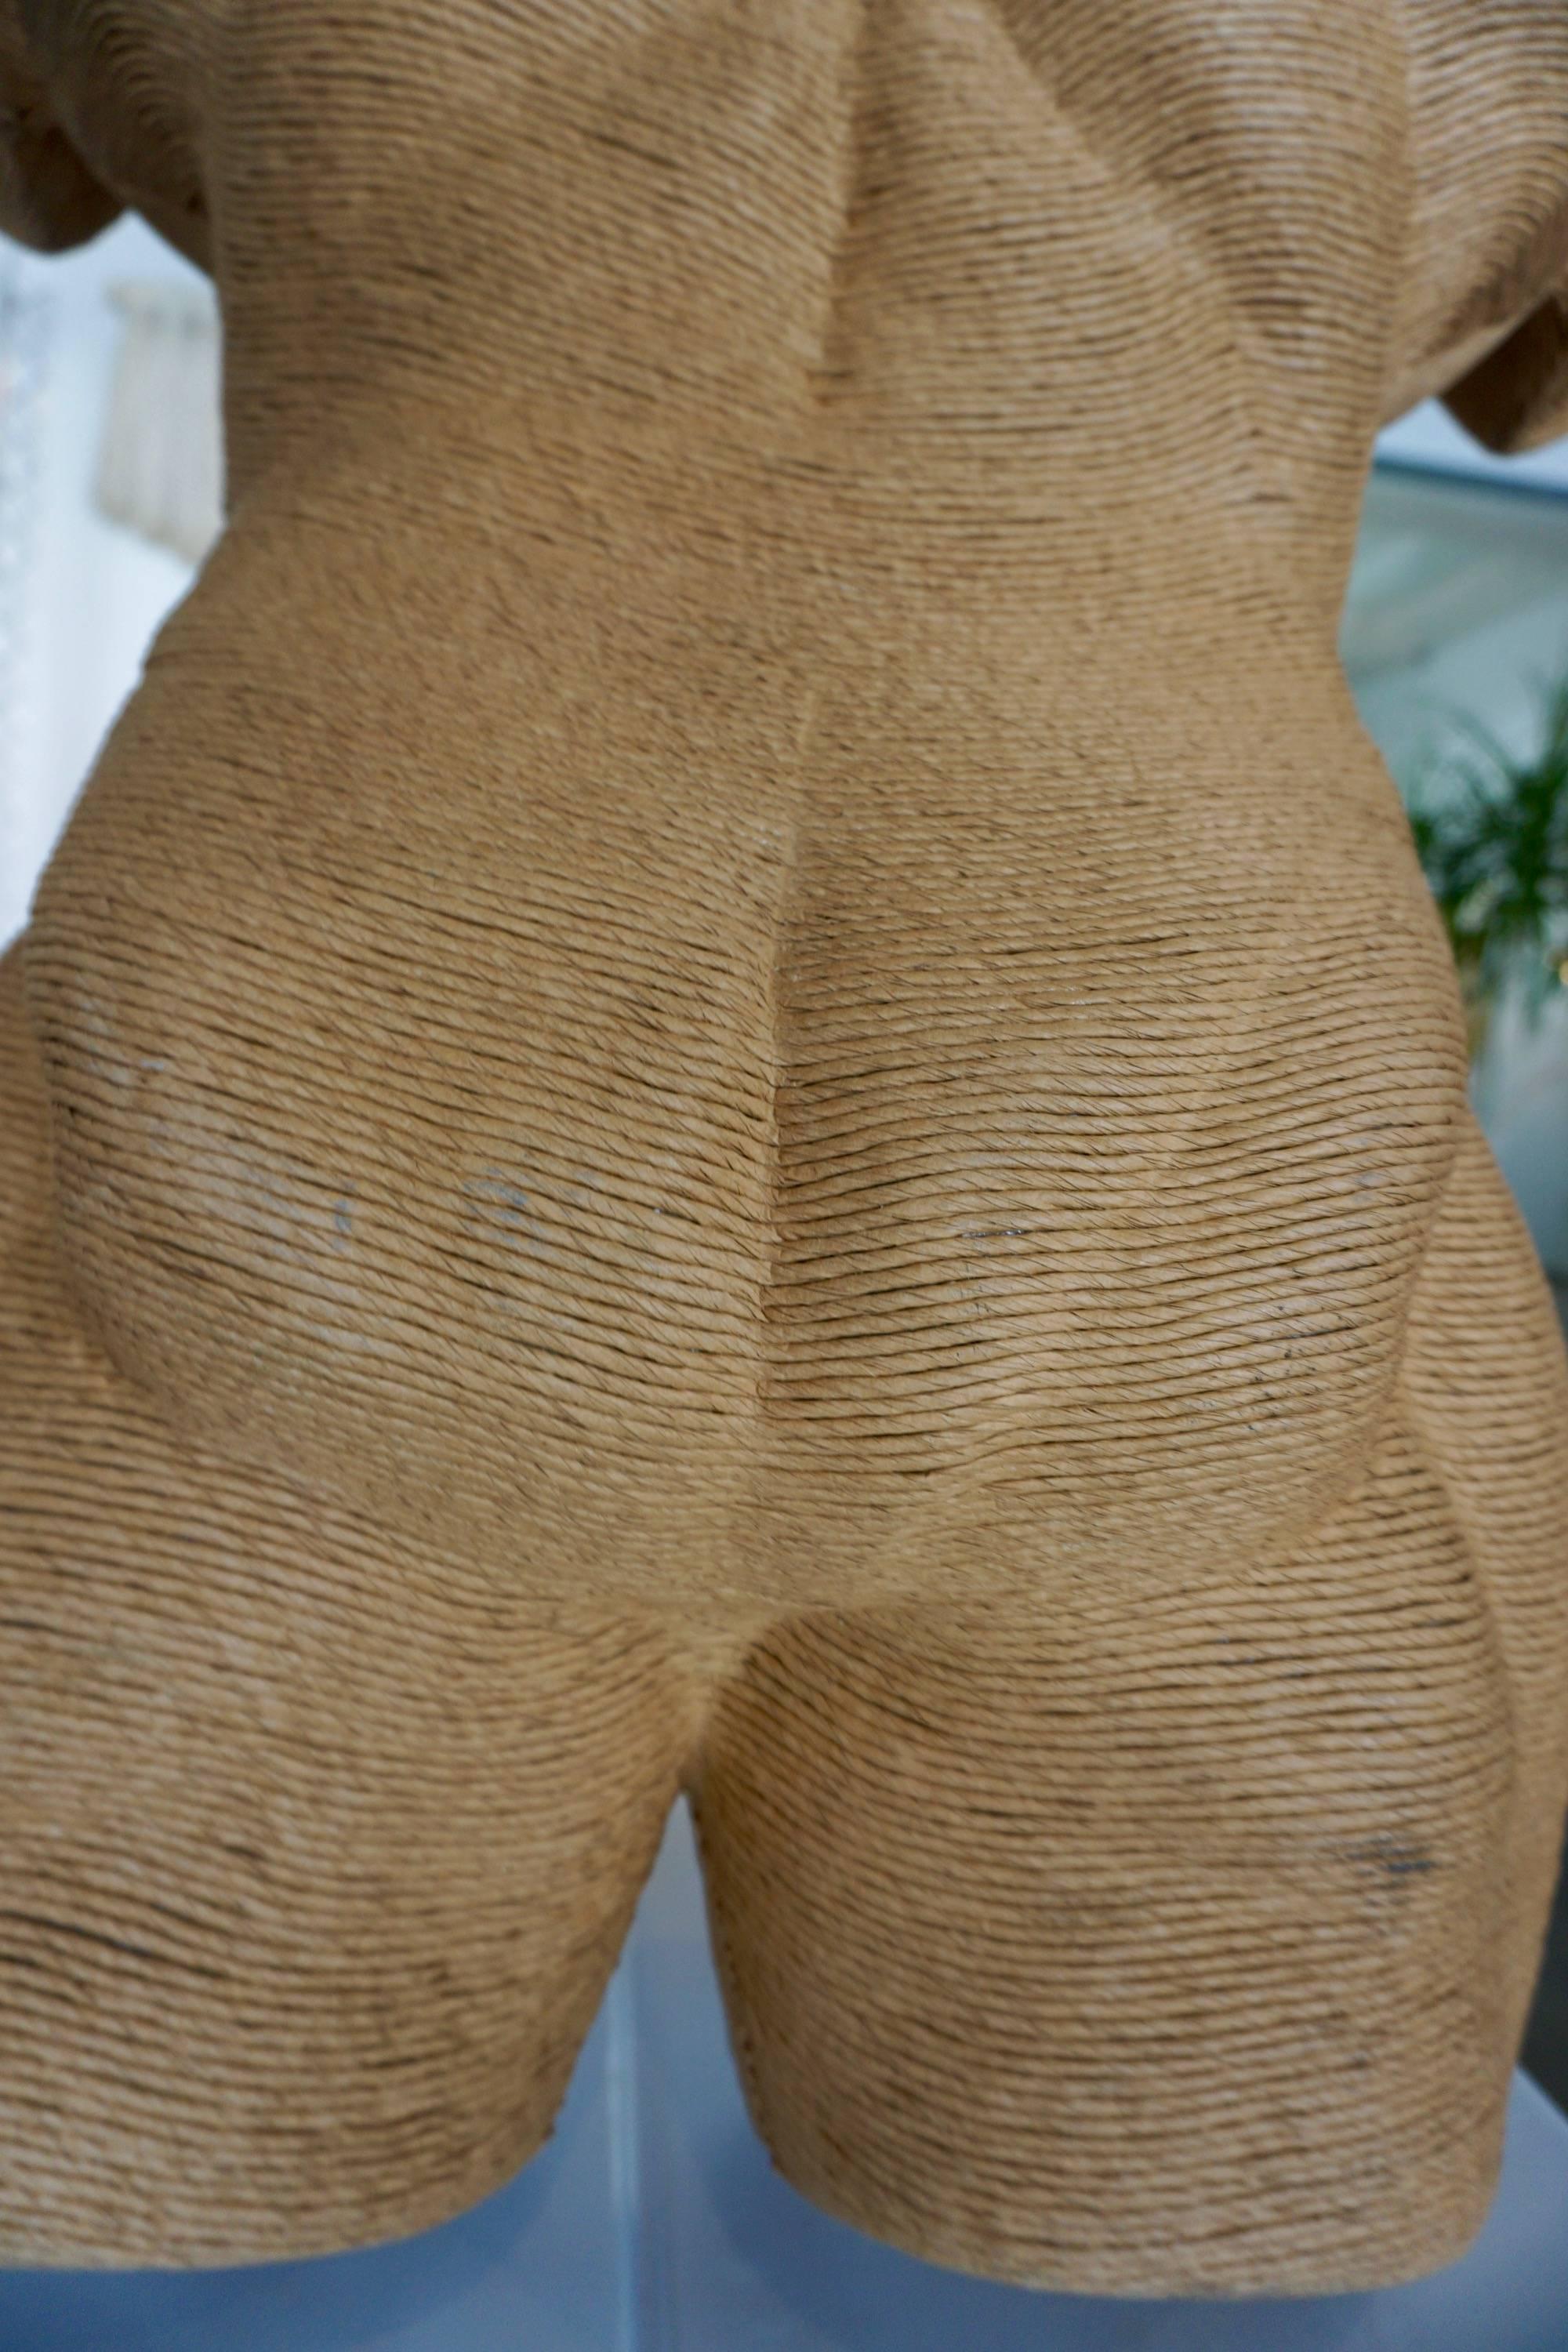 Ripped Male Torso Sculpture/Mannequin 2